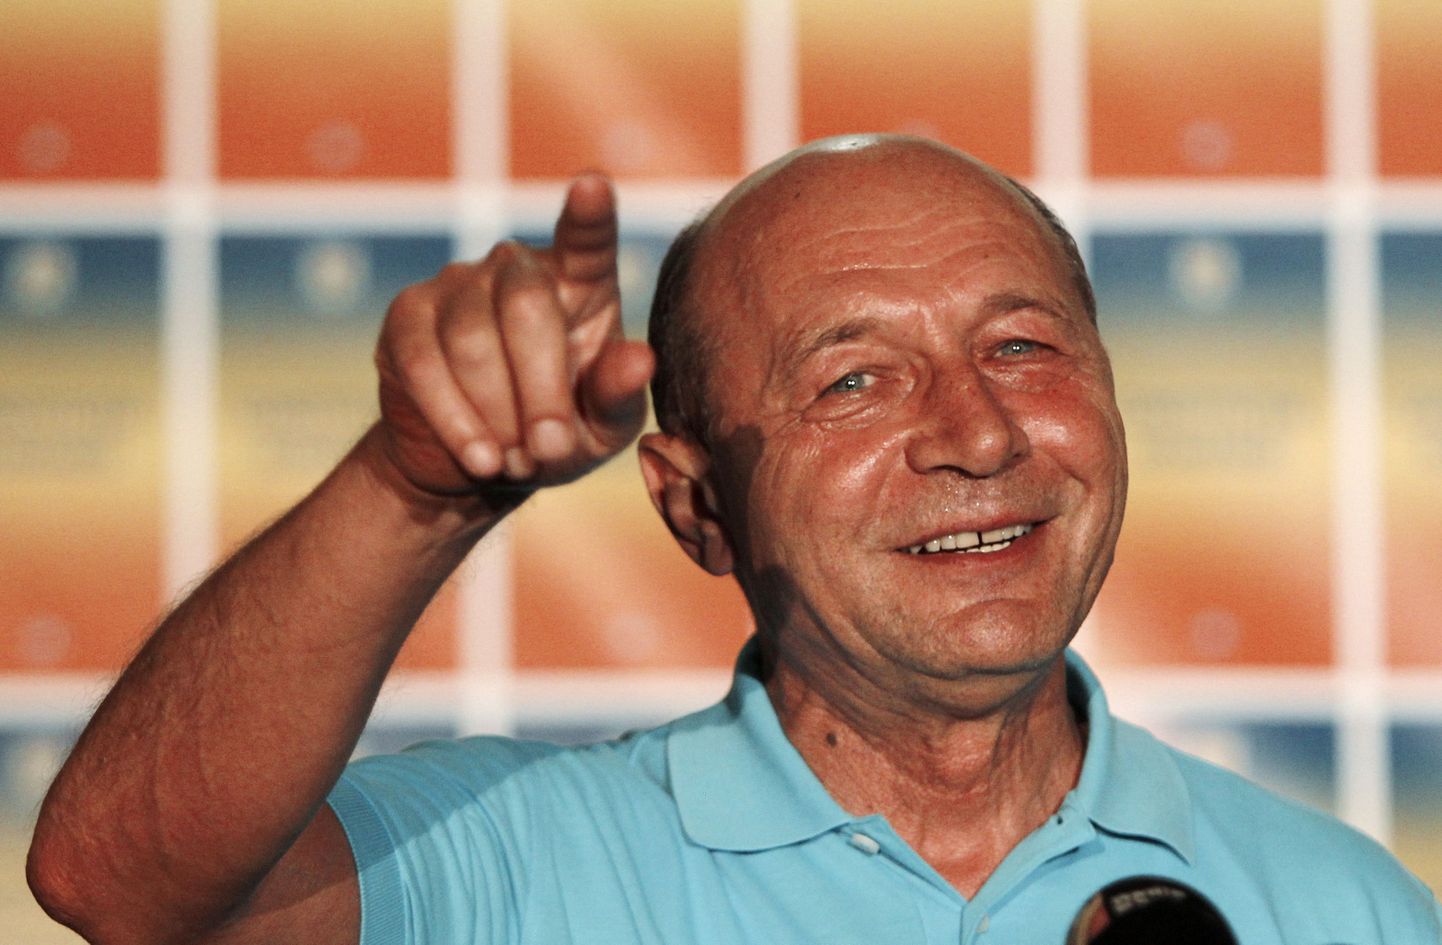 Rumeenia president Traian Băsescu